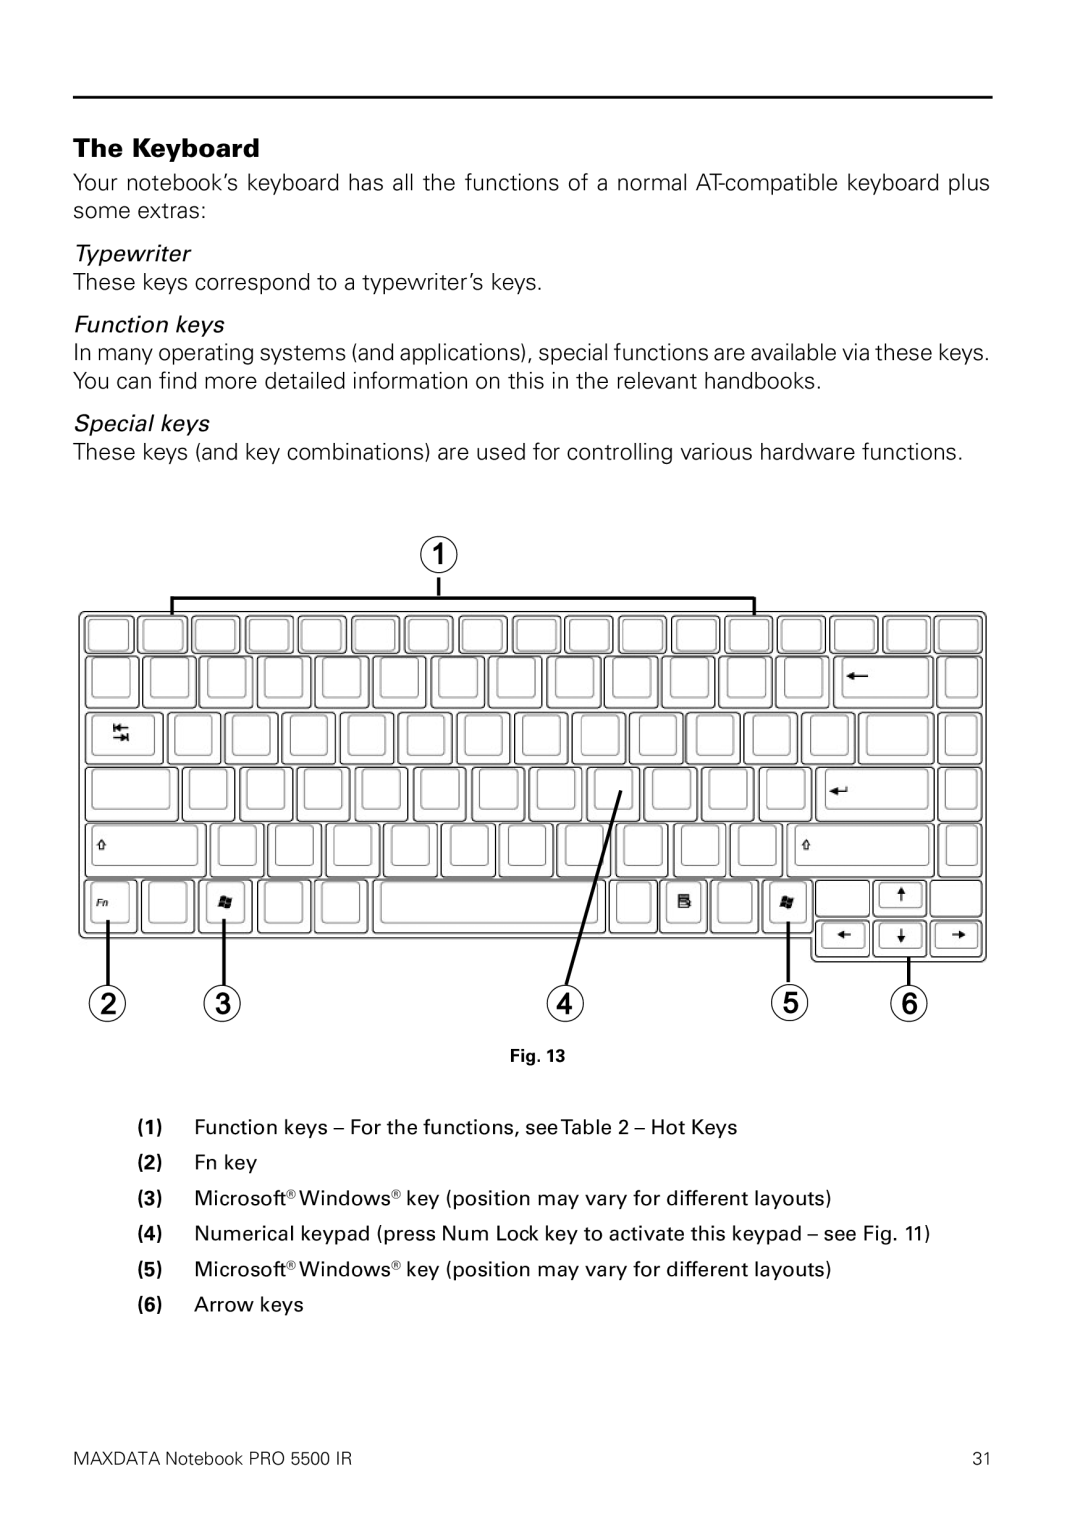 MAXDATA 5500 IR user manual The Keyboard, Typewriter, Function keys, Special keys 